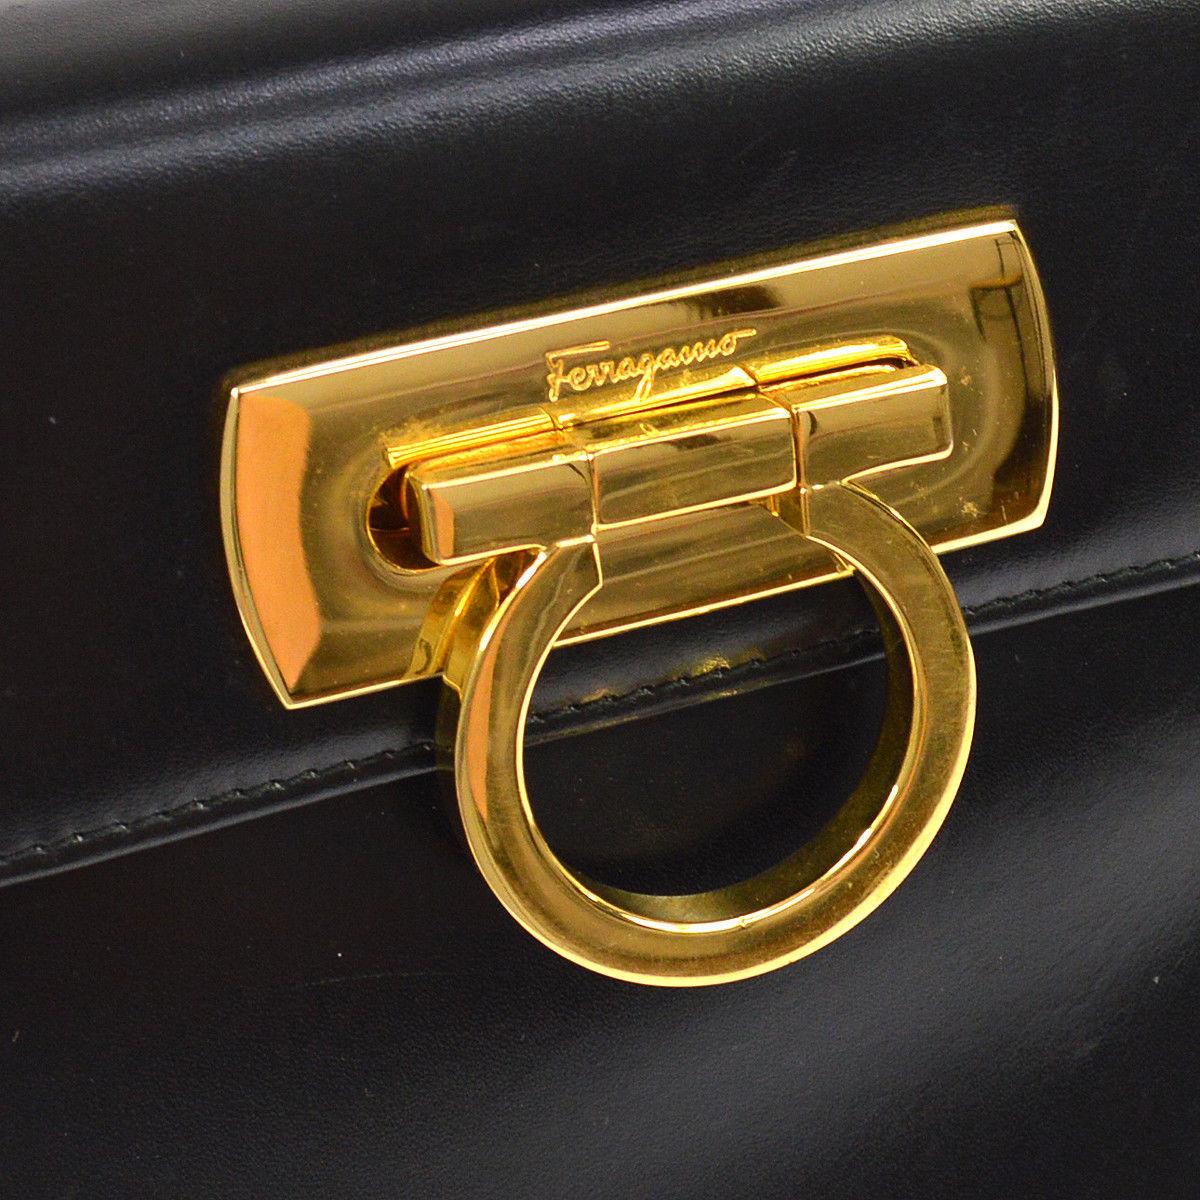 Salvatore Ferragamo Black Leather Gold 2 in 1 Kelly Style Top Handle Shoulder Bag

Leather
Gold tone hardware
Leather lining
Shoulder strap drop 14